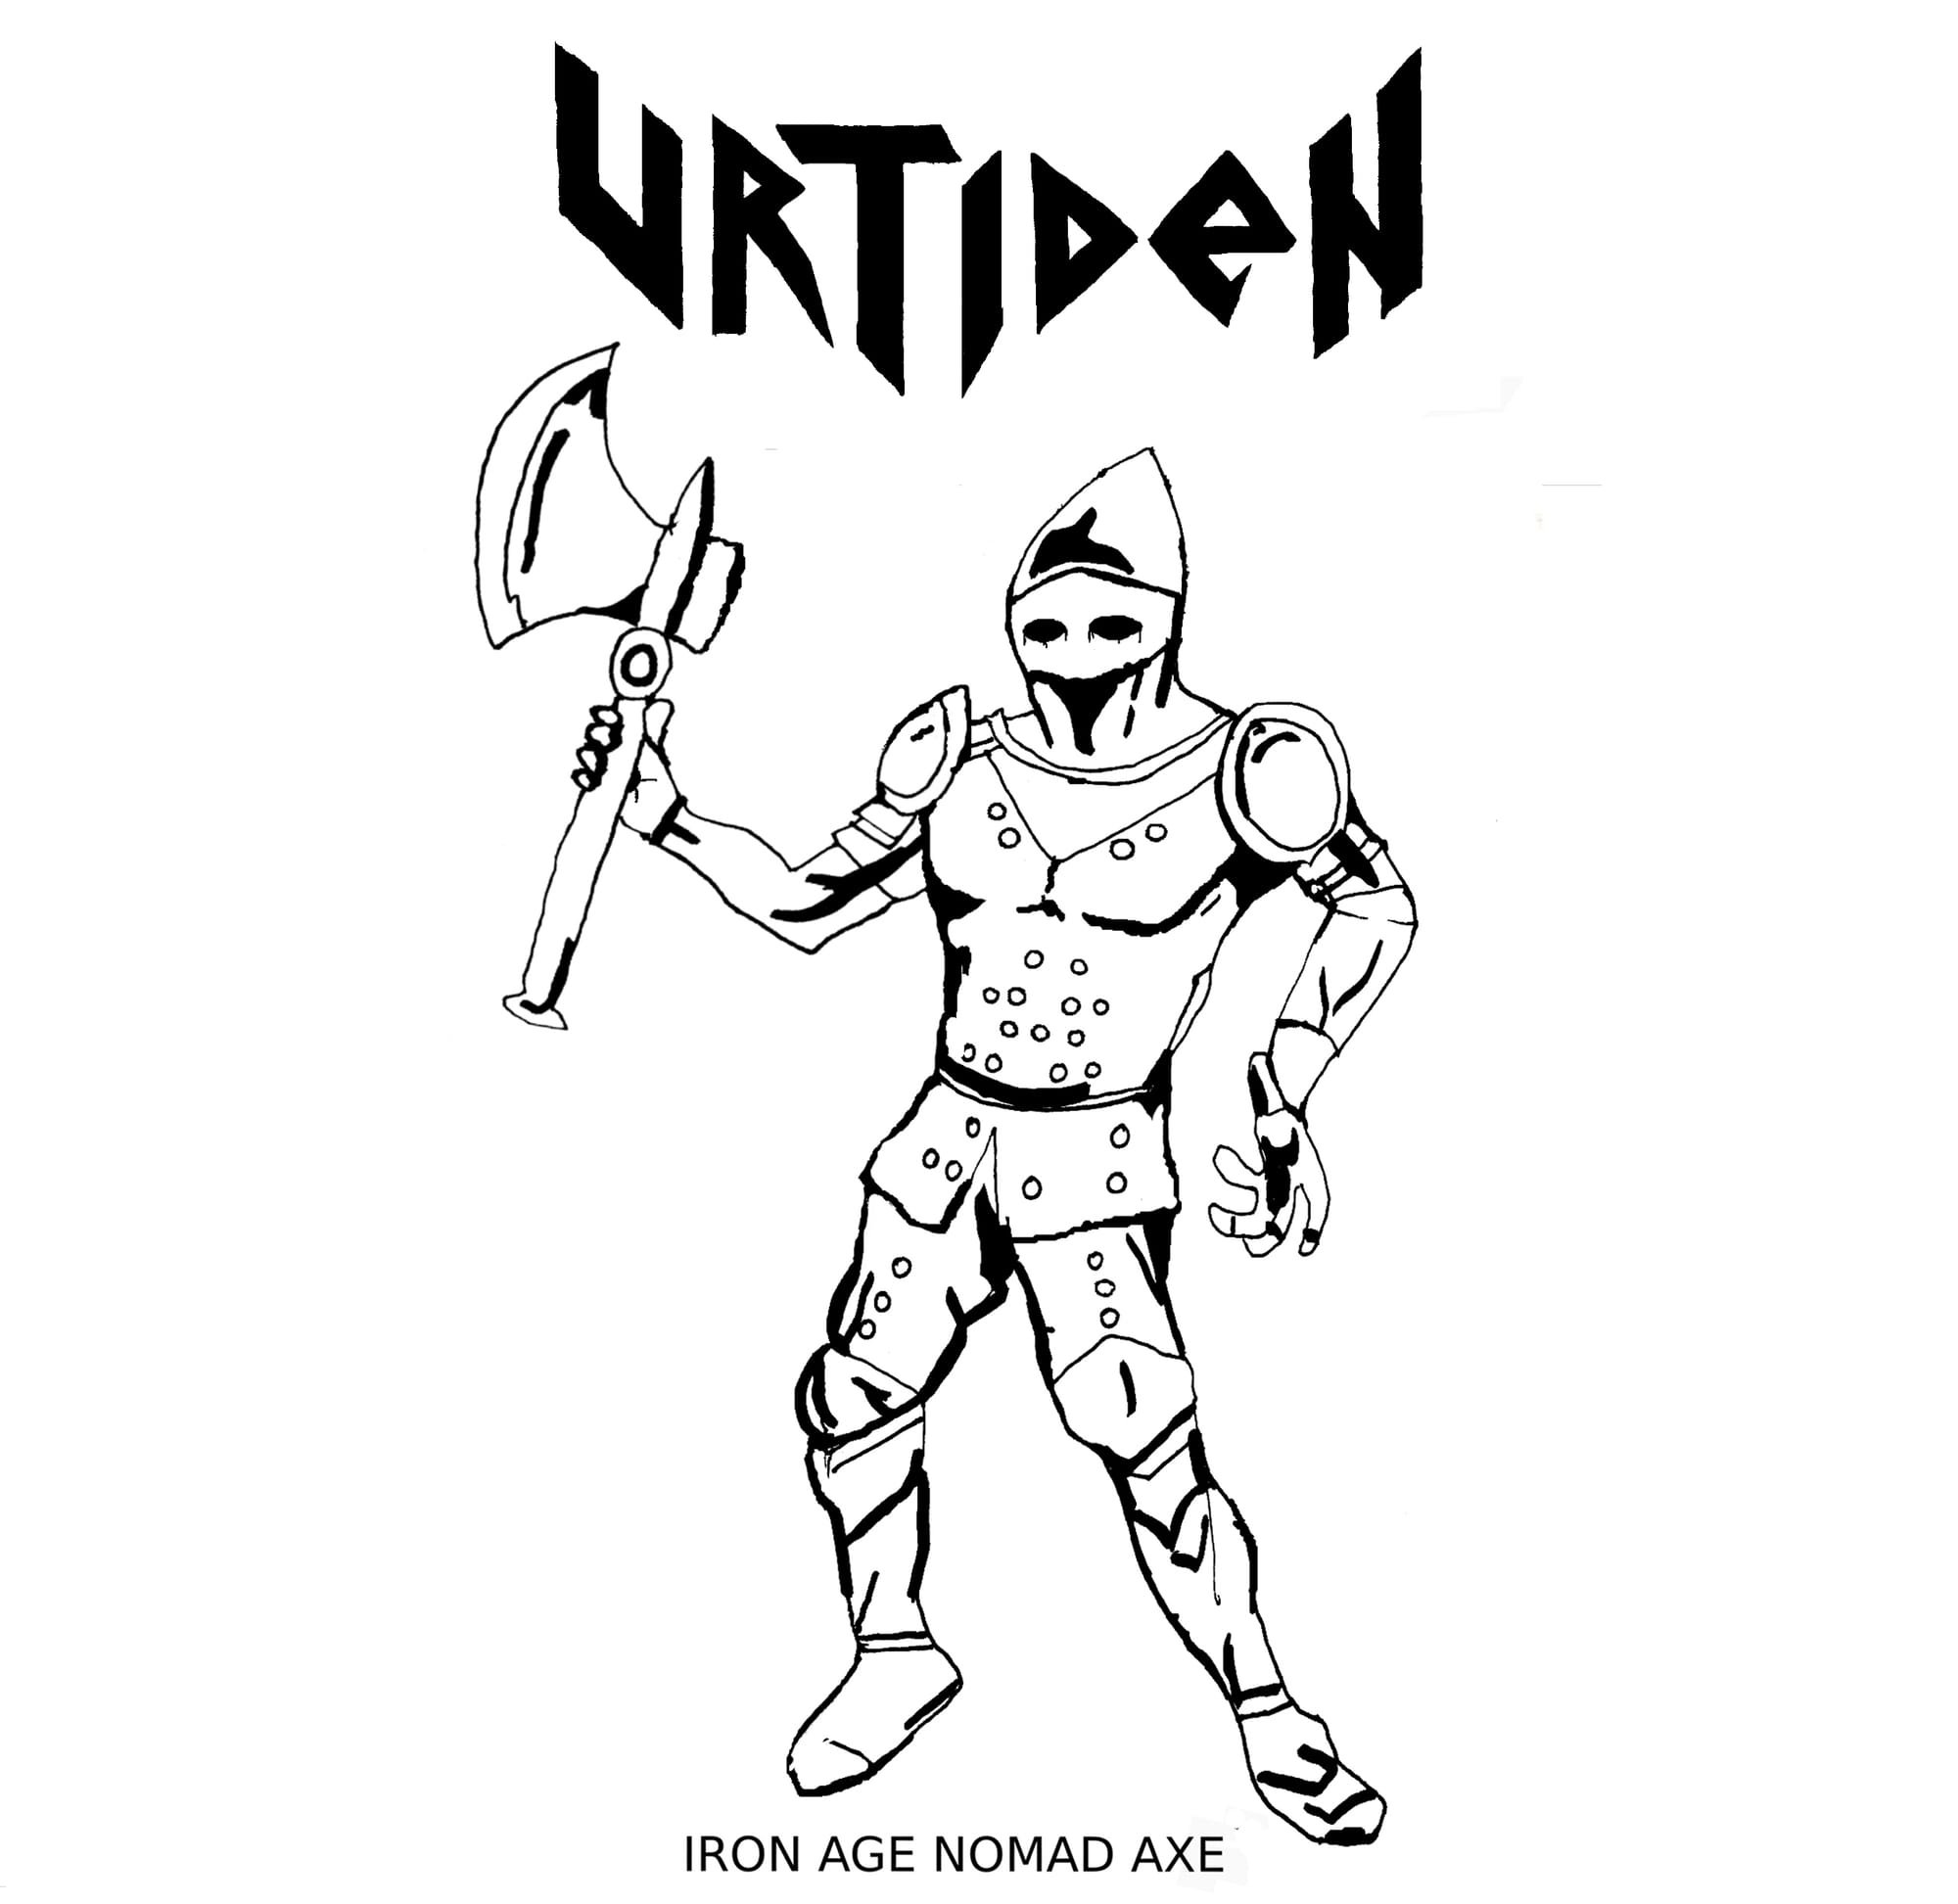 Interview with URTIDEN